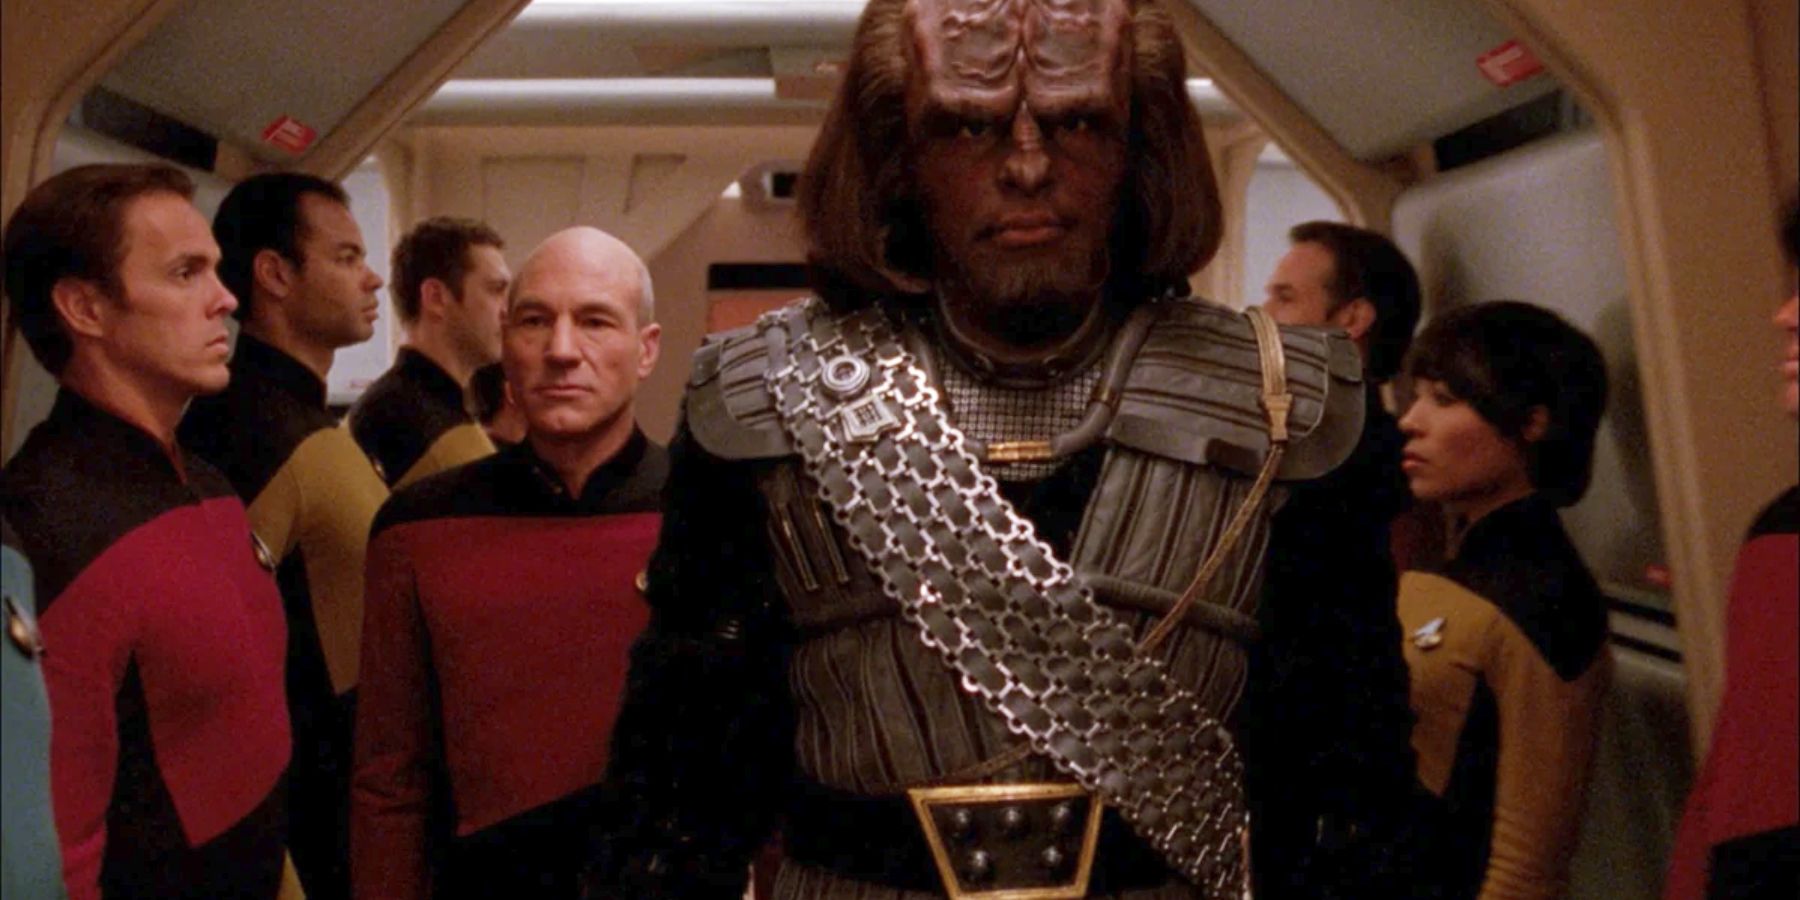 Star Trek Worf the Klingon